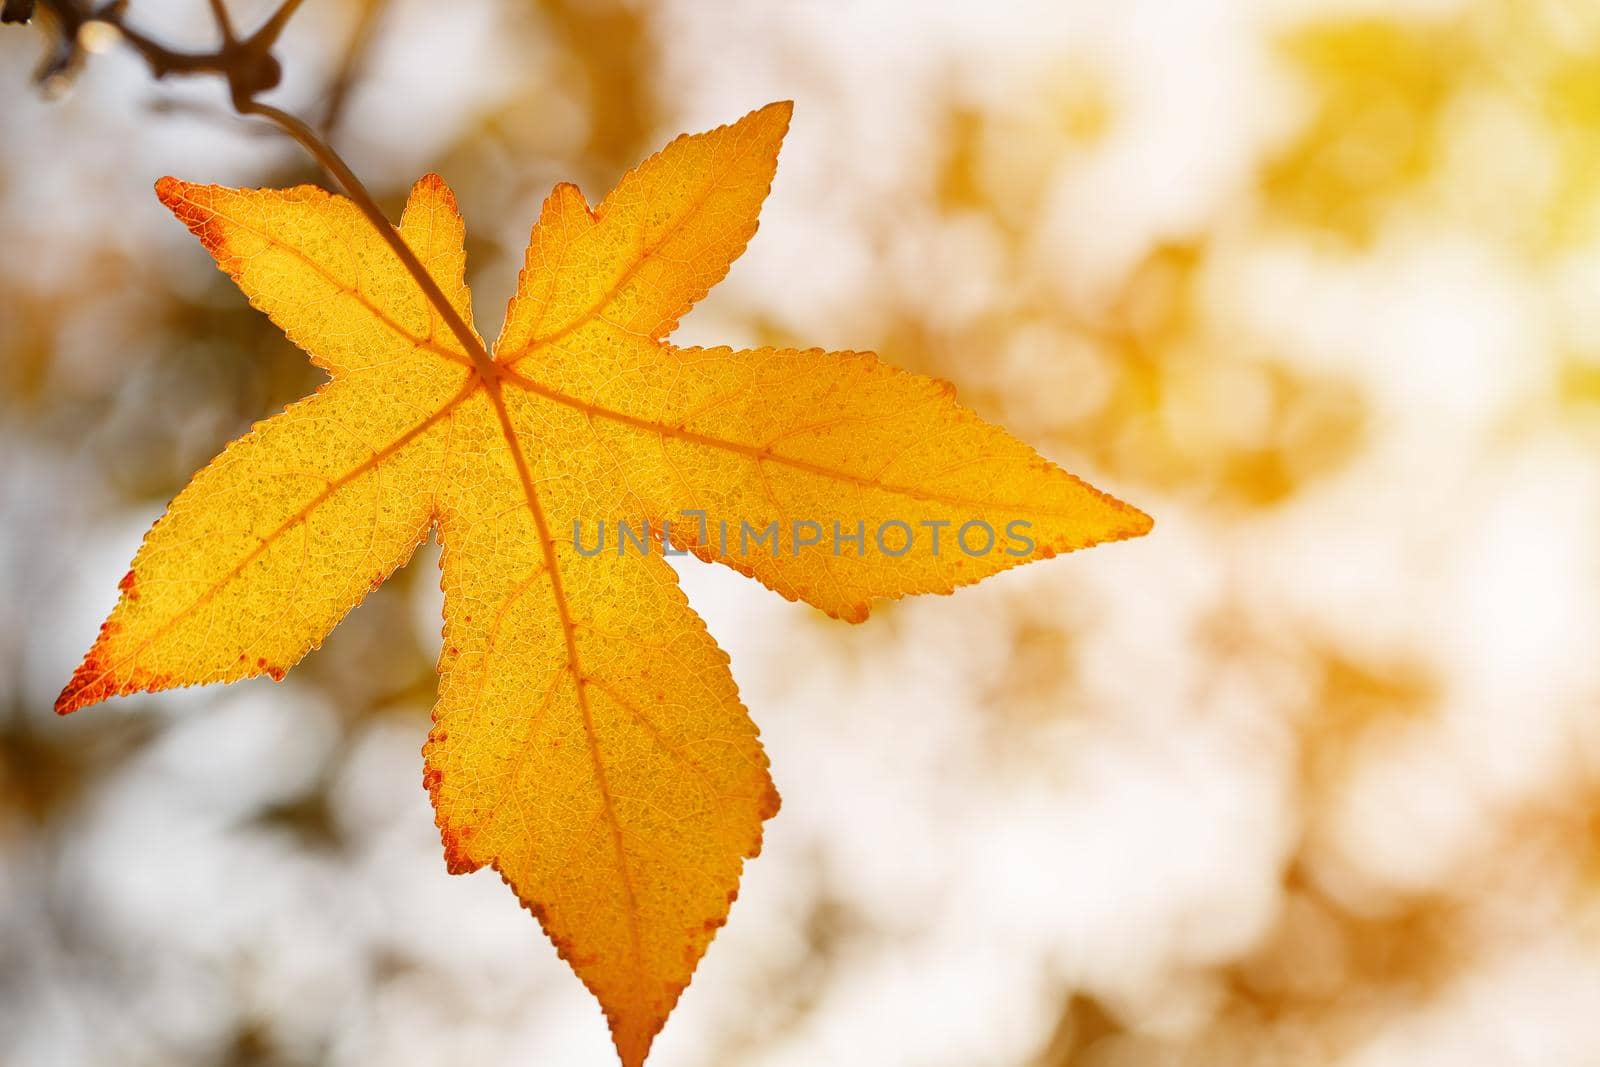 Autumn leaf, old orange maple leaves, dry foliage of trees, soft focus, autumn season, nature change, bright soft sunlight Abstract autumn background.